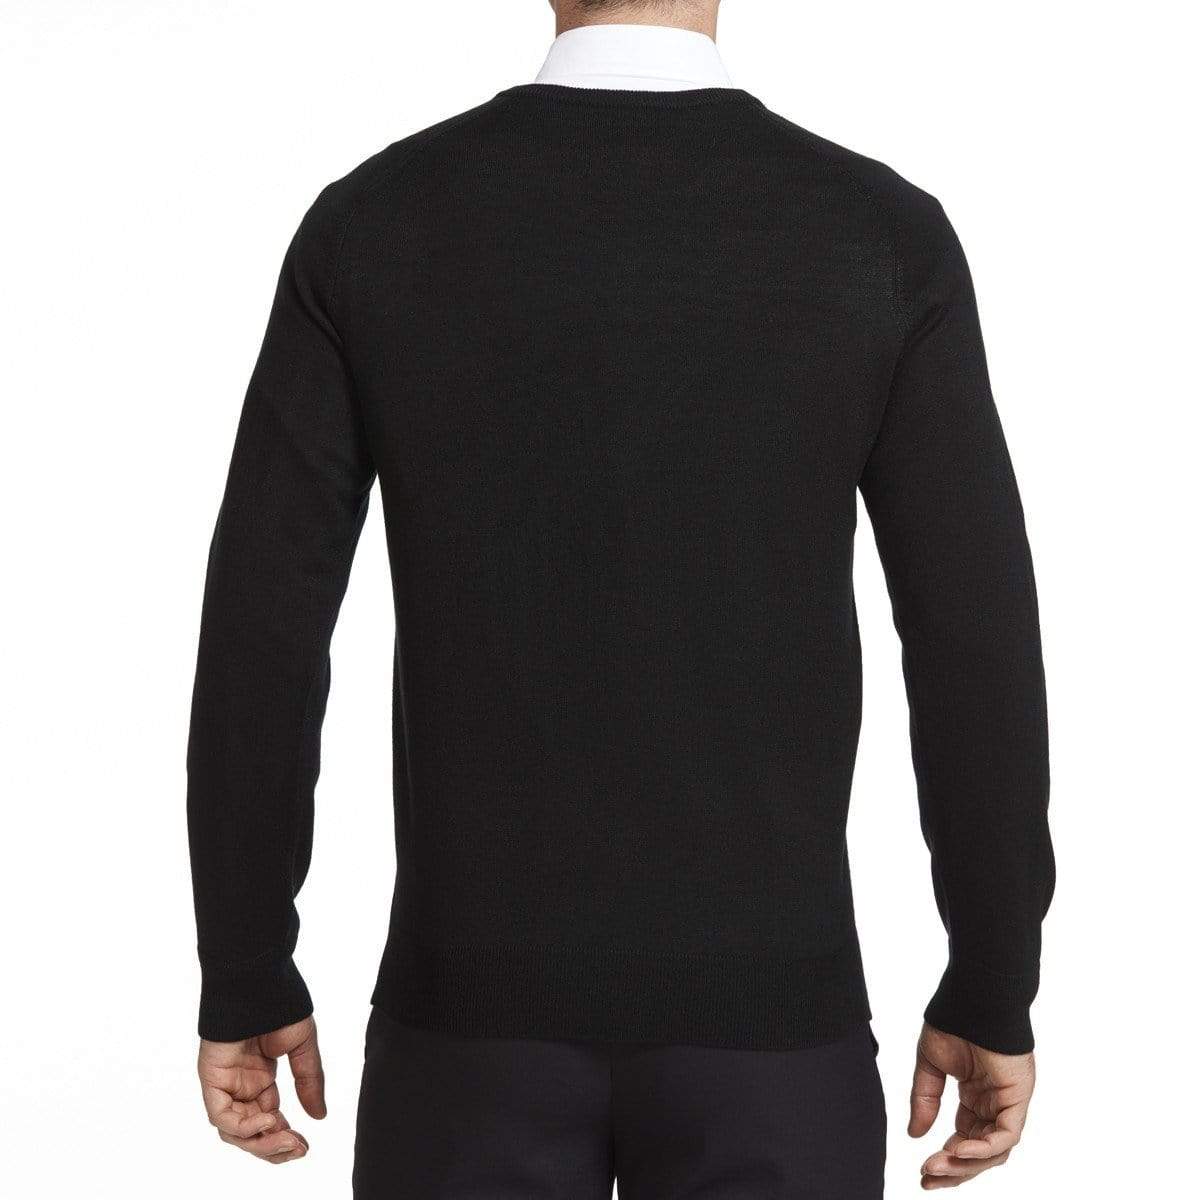 NNT V-Neck Sweater CATE33 Corporate Wear NNT   